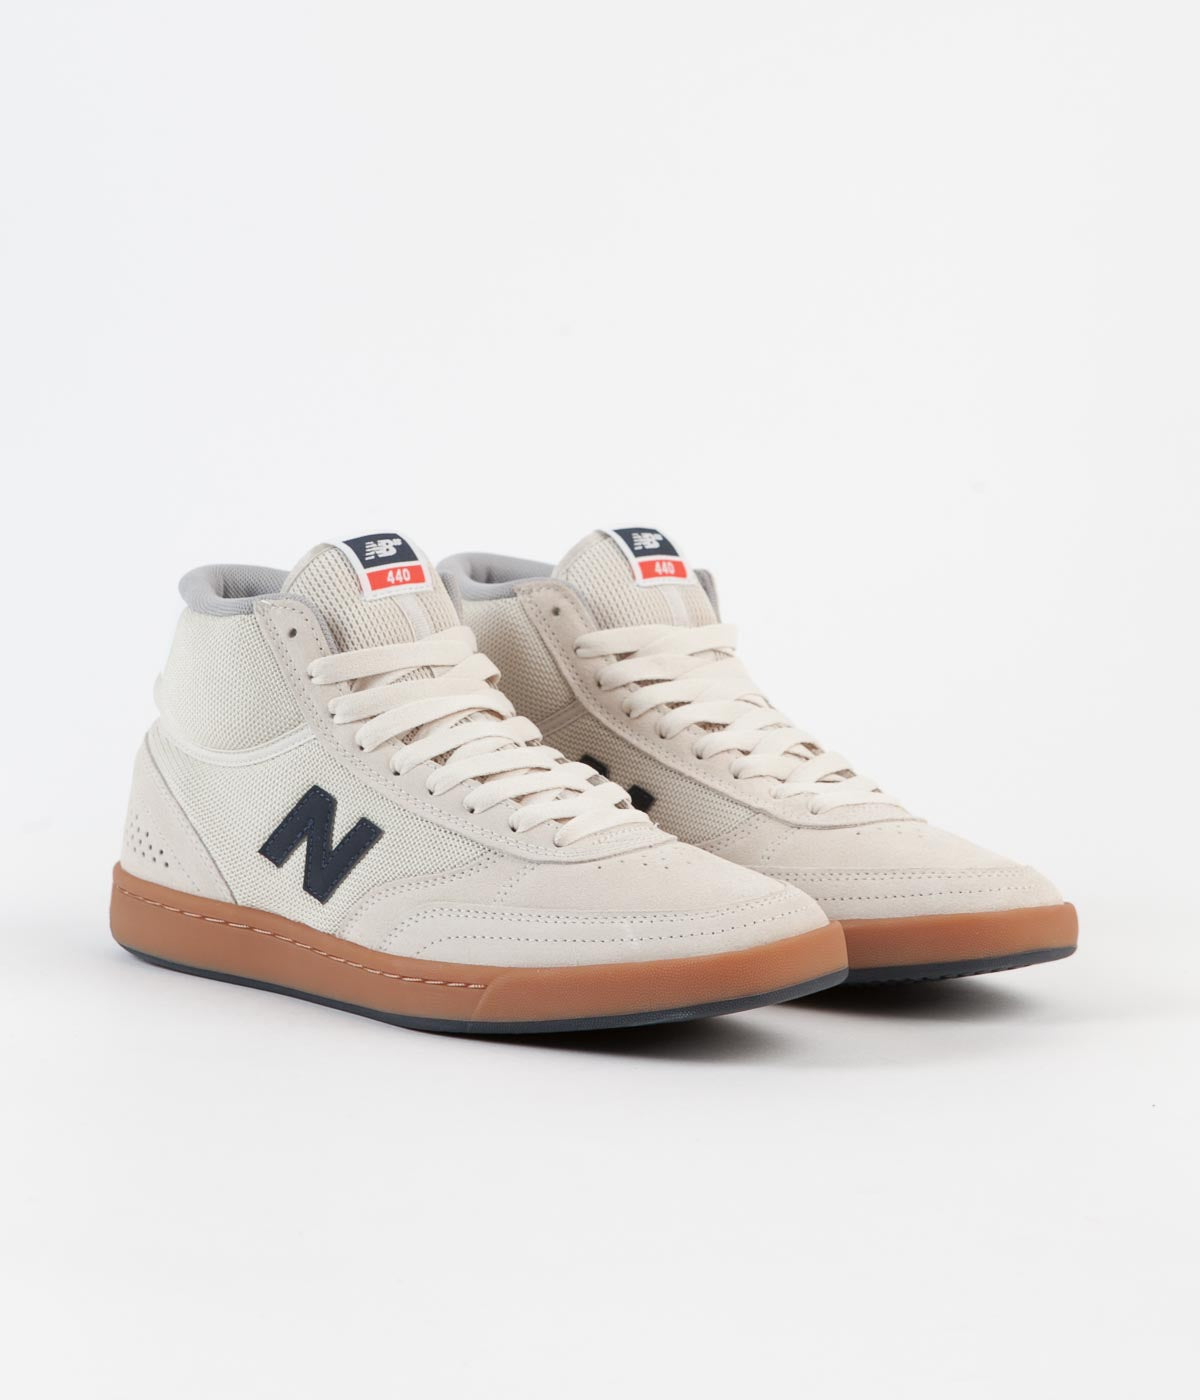 New Balance Numeric 440 Hi Shoes - Navy / Red | Flatspot